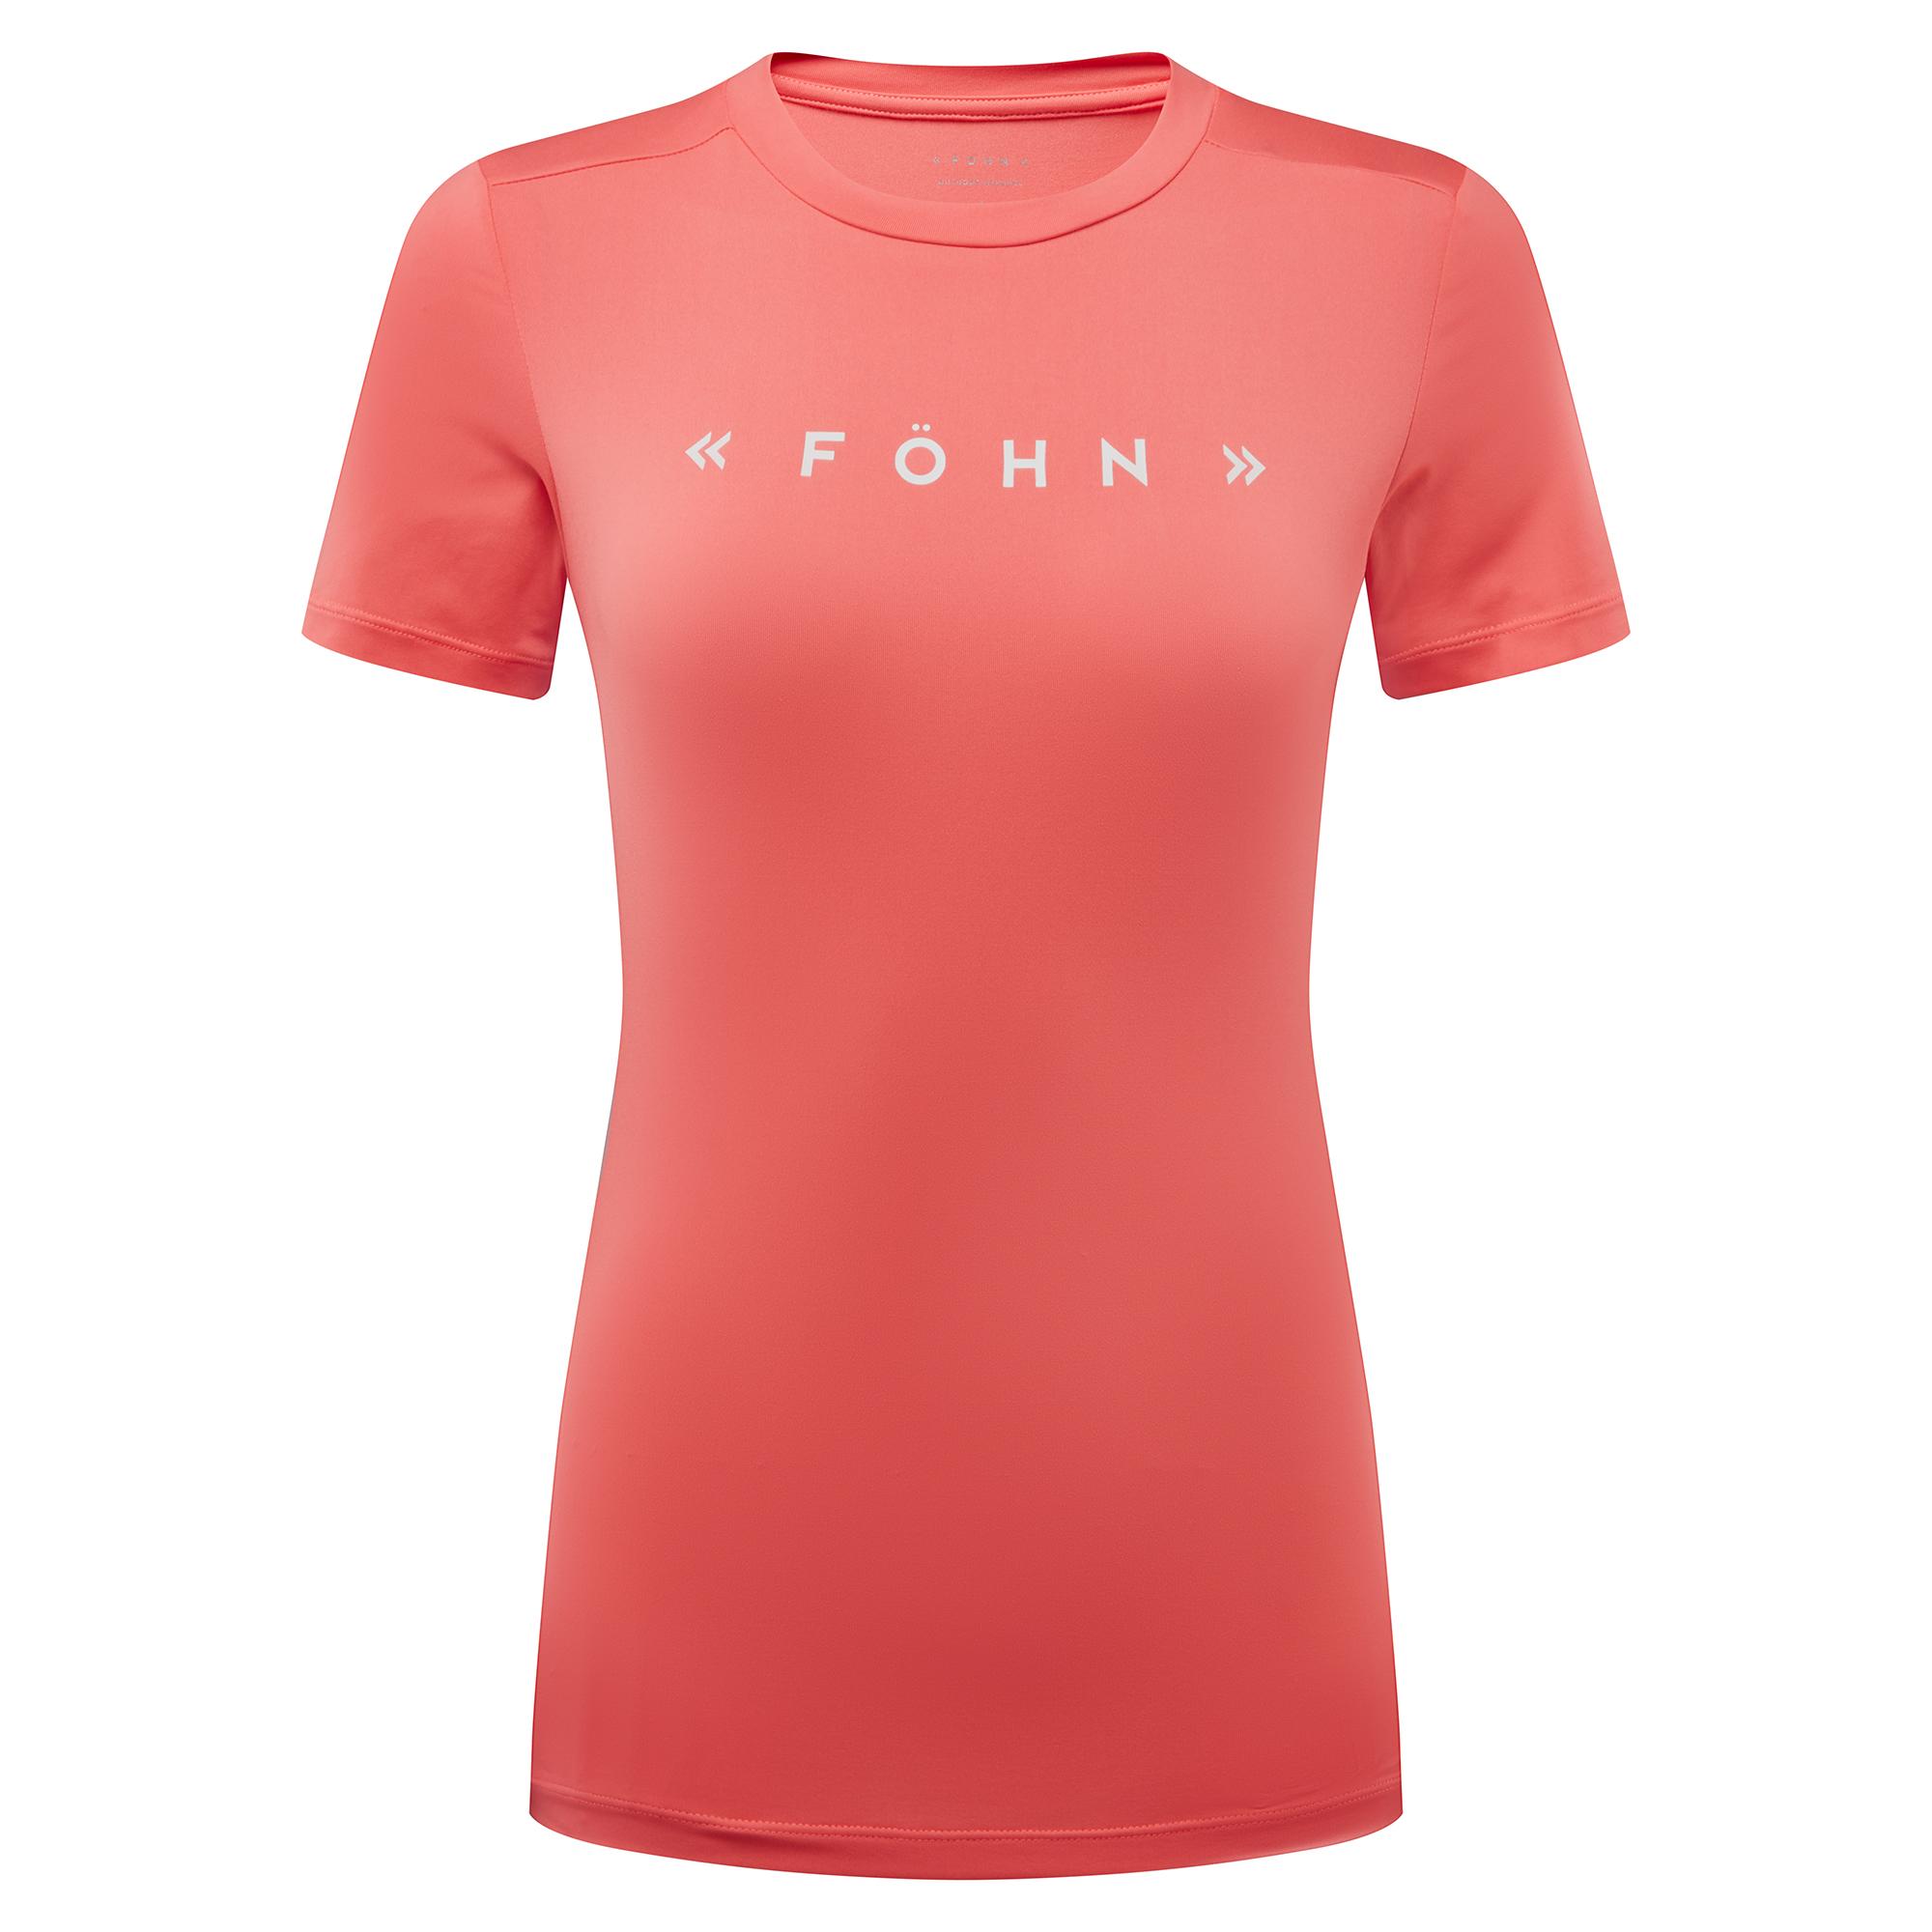 Fhn Womens Short Sleeve Rash Vest - Upf50 - Pink